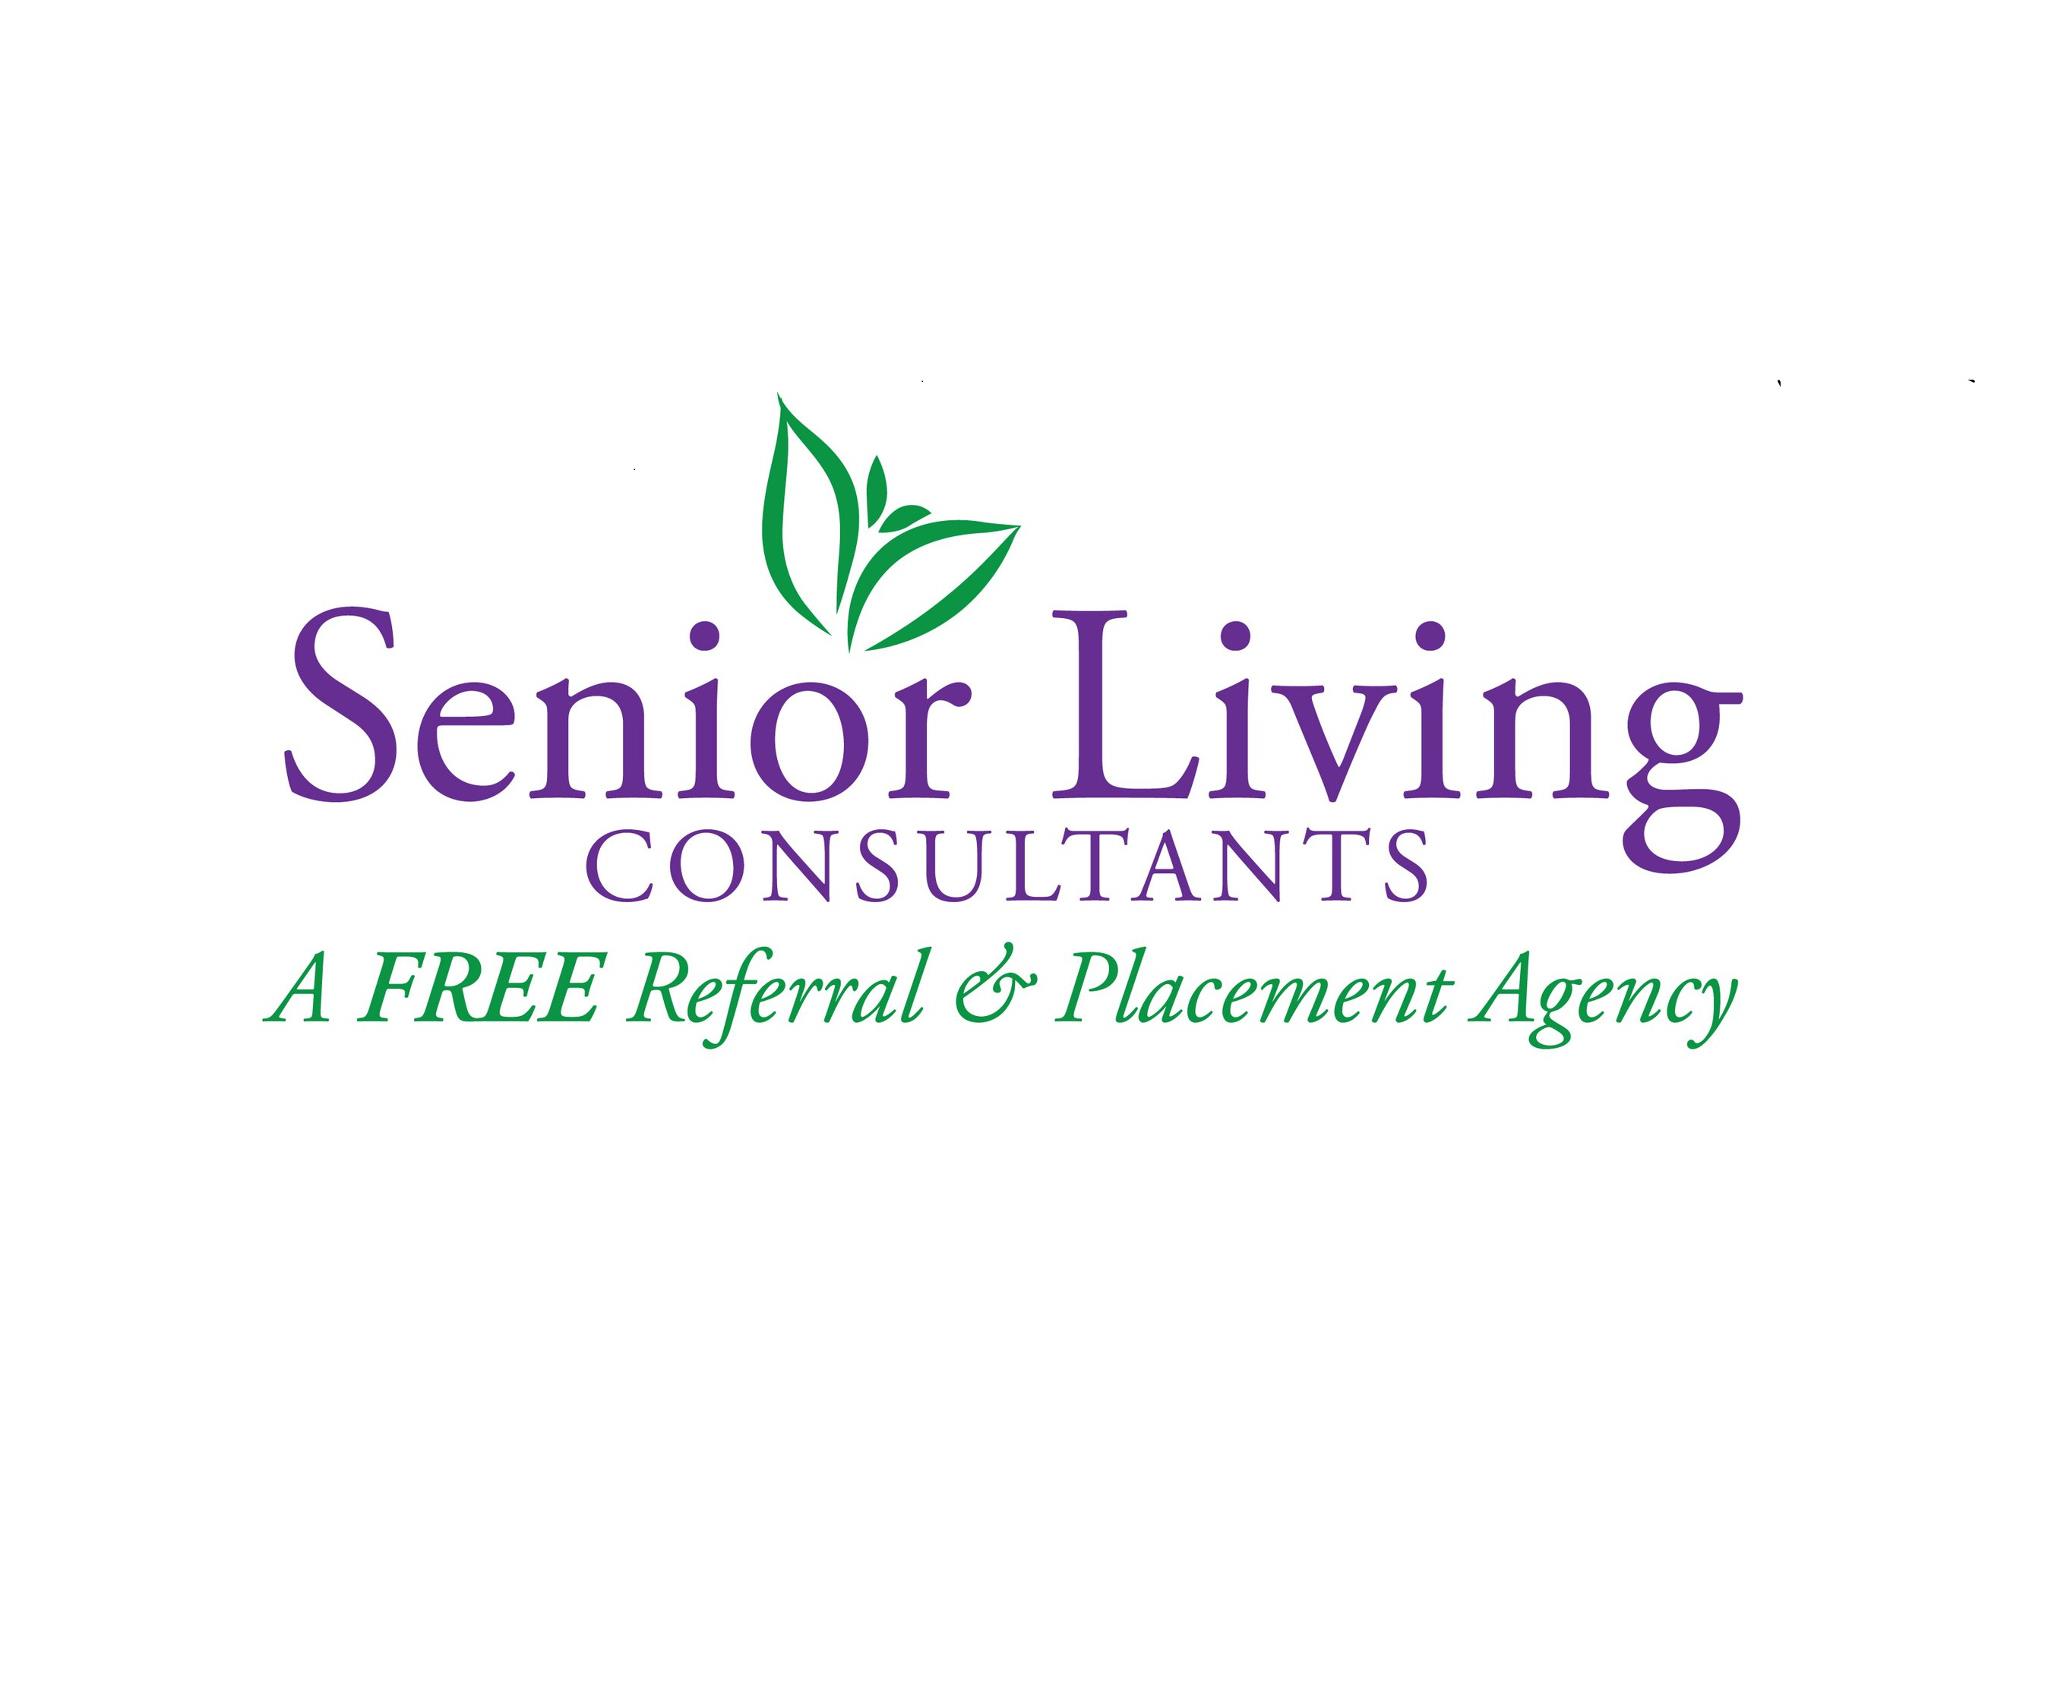 G.  Senior Living Consultants (Tier 3)